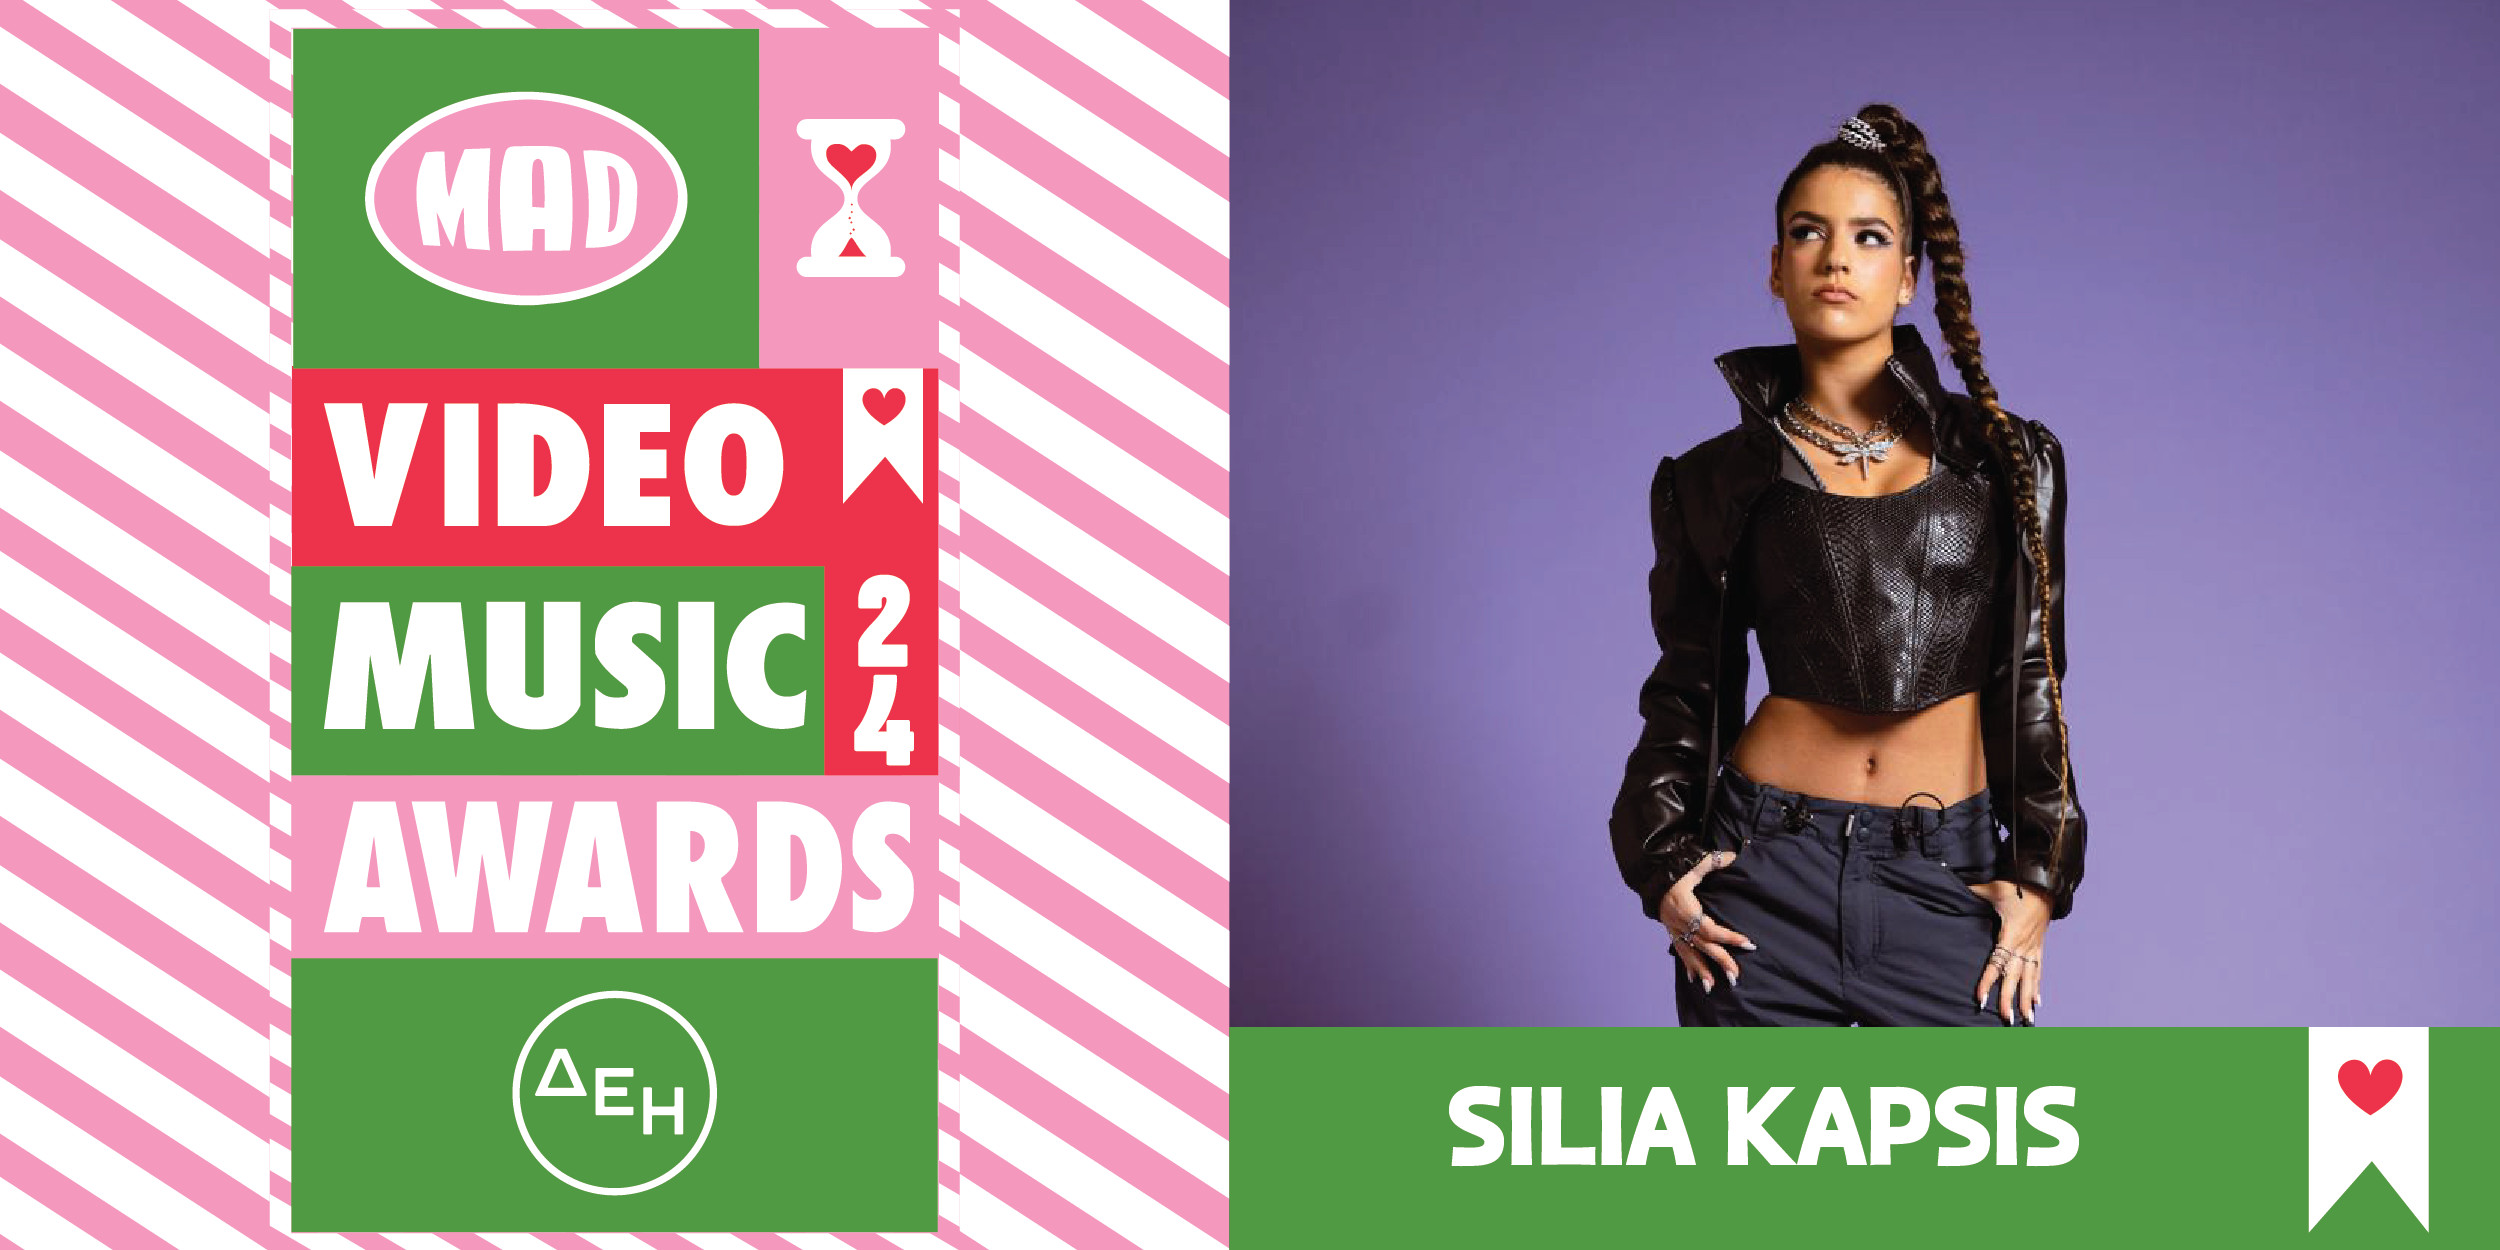 Mad VMA: Η Silia Kapsis θέλει να κάνει ντουέτο με την Έλενα Παπαρίζου